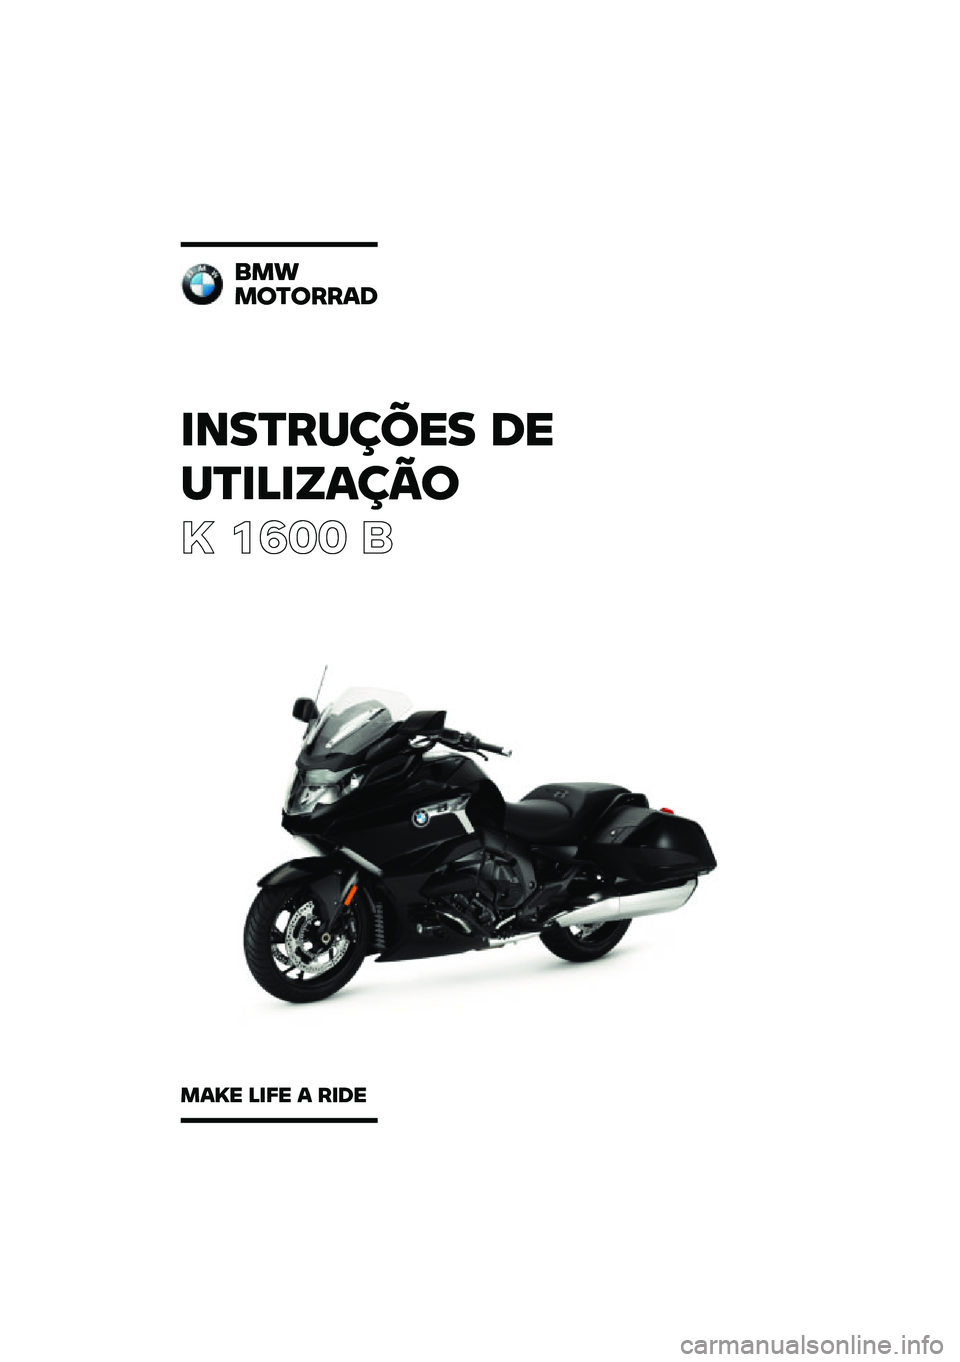 BMW MOTORRAD K 1600 B 2020  Manual do condutor (in Portuguese) ��������	�� 
�
� 
����������

�
  ����  �	 ���
��
��
����
���� ���� � ���
� 